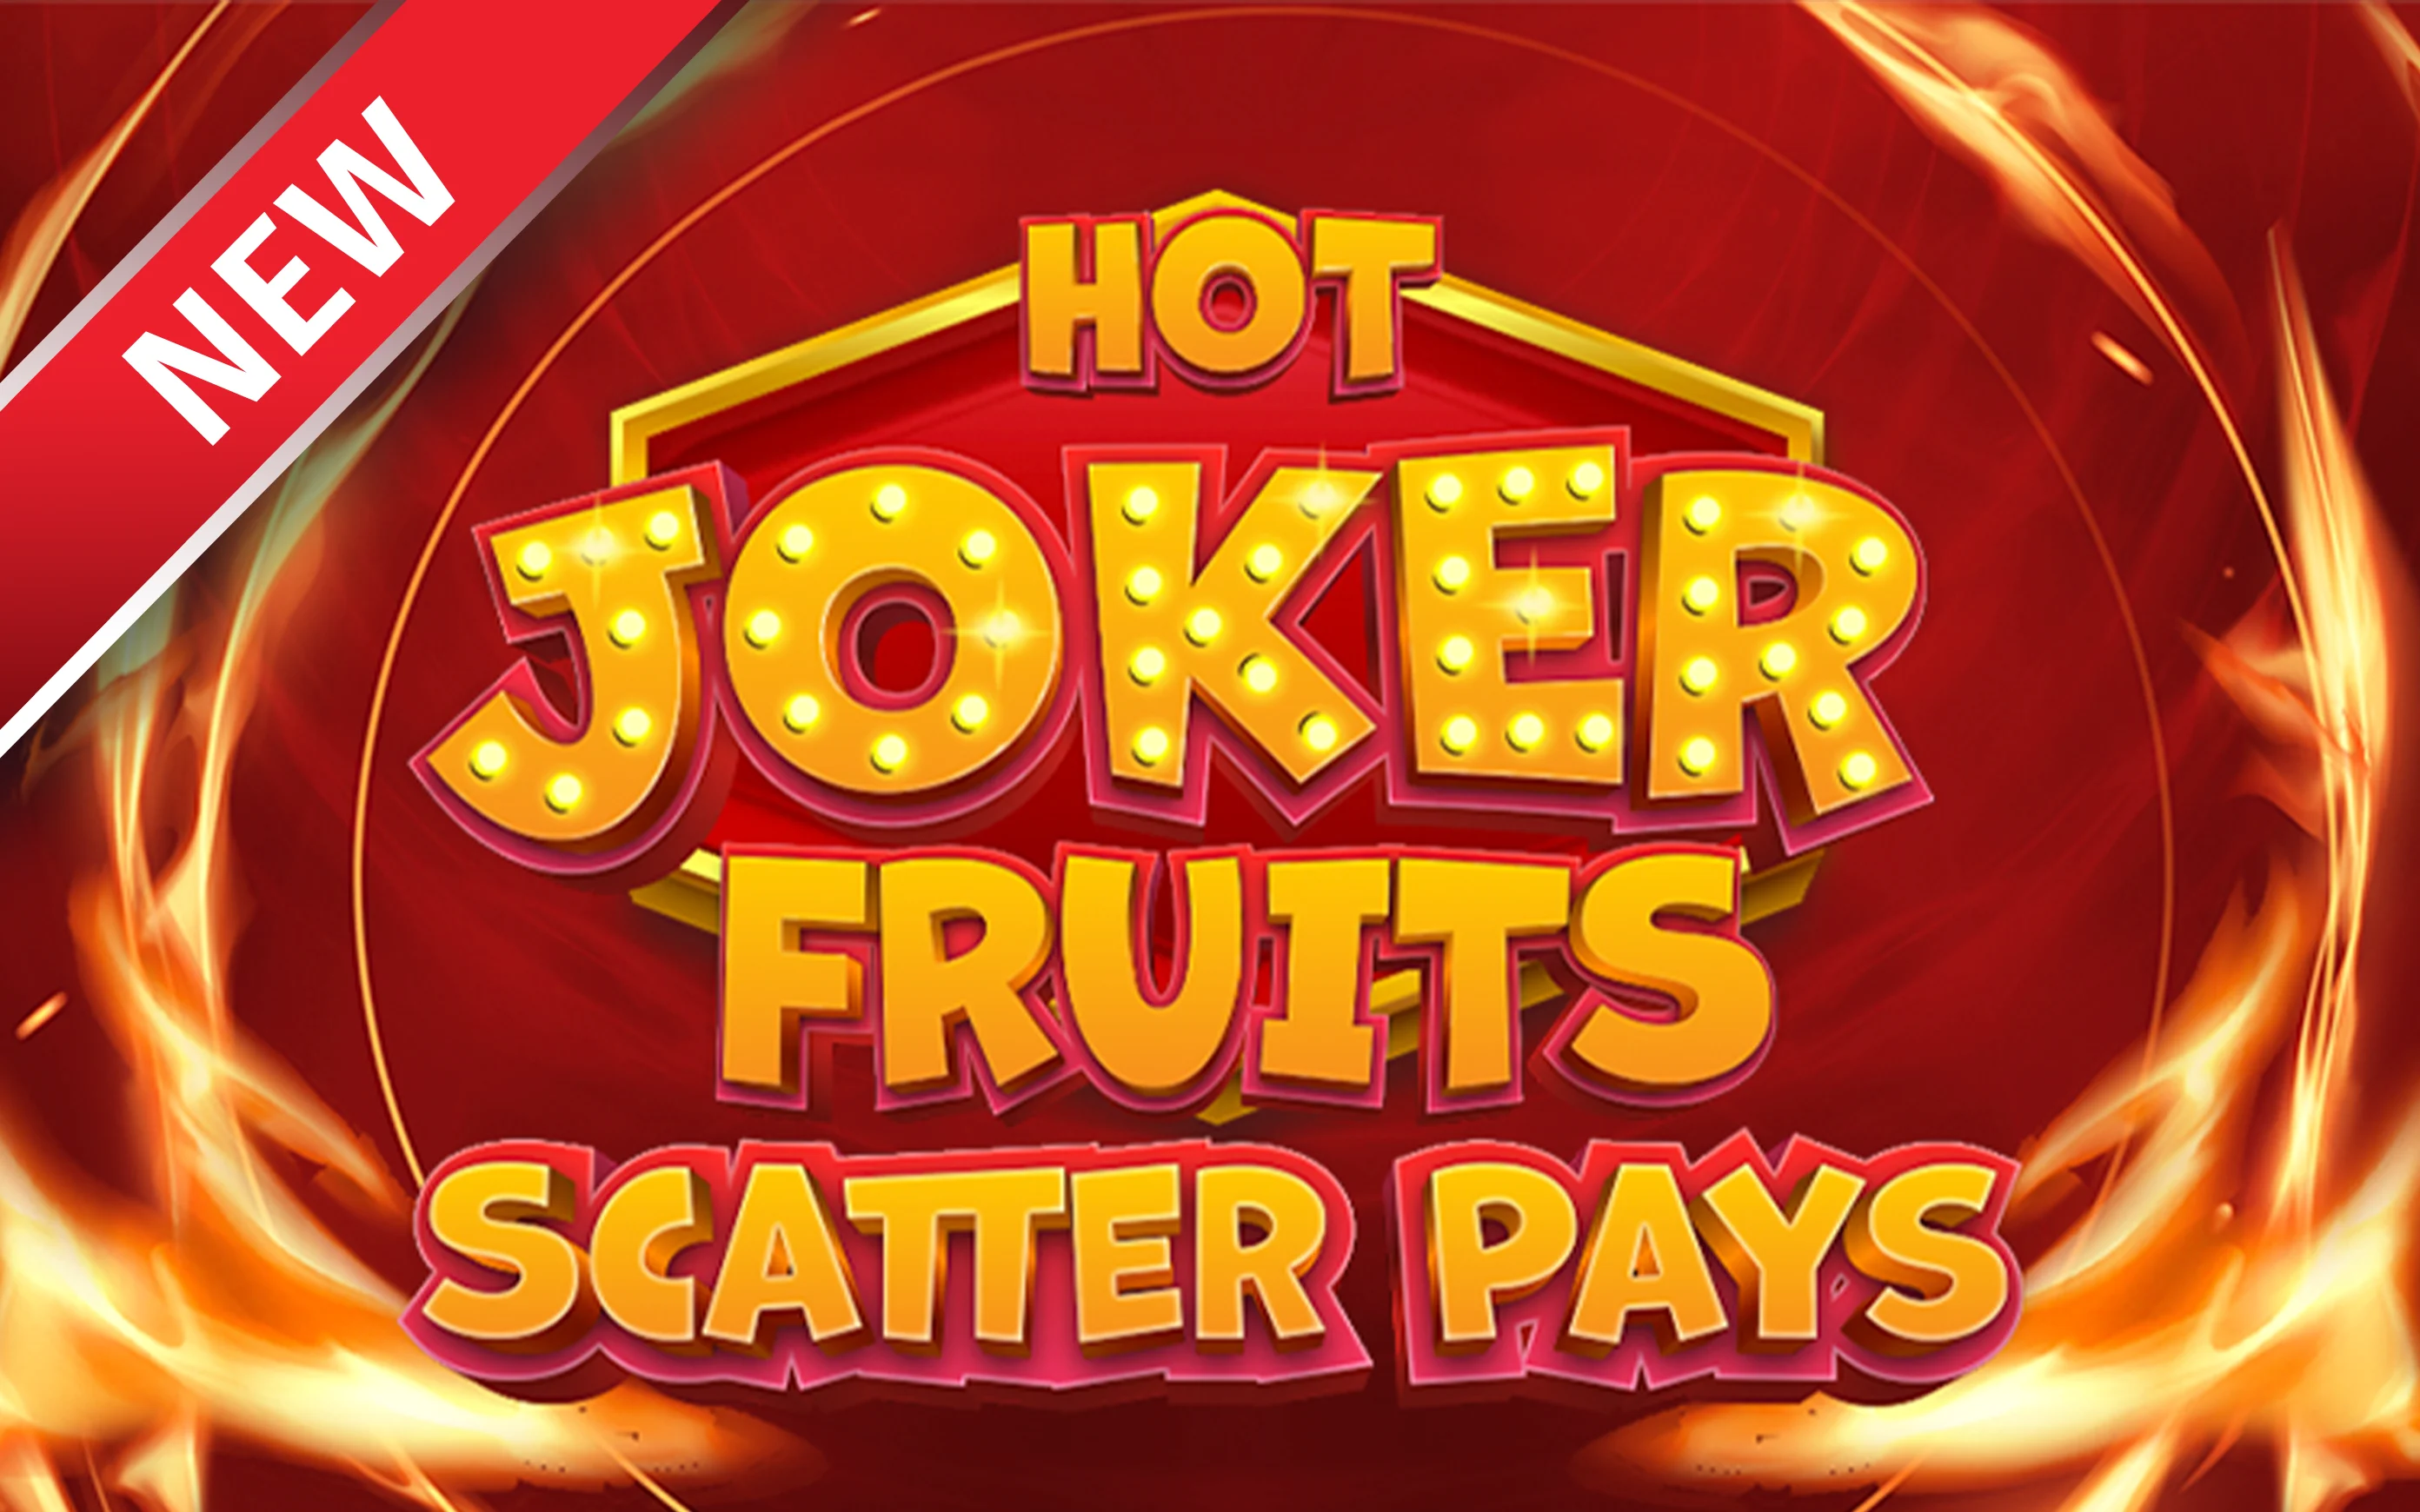 Play Hot Joker Fruits: Scatter Pays on Starcasino.be online casino